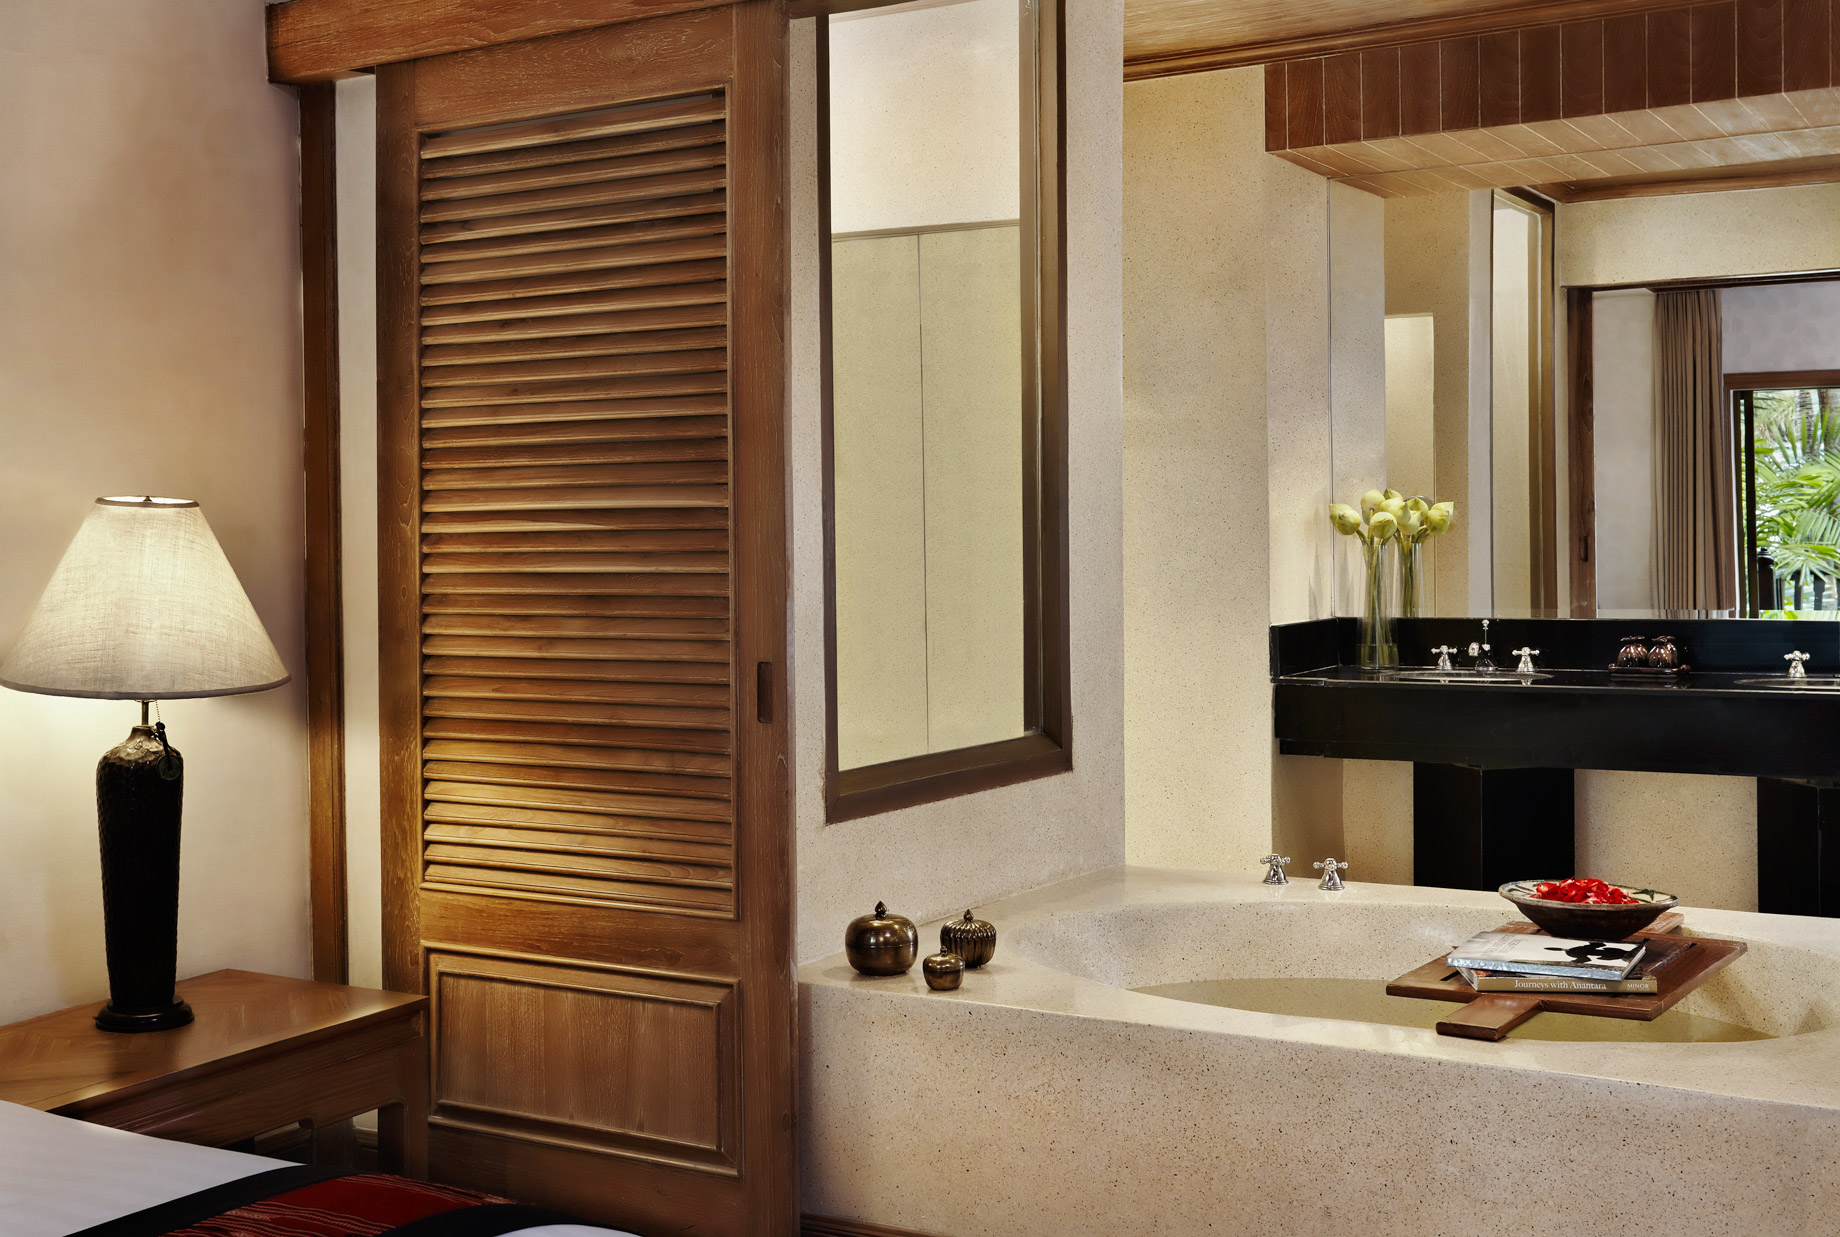 Anantara Hua Hin Resort – Prachuap Khiri Khan, Thailand – Anantara Garden View Suite Bathroom